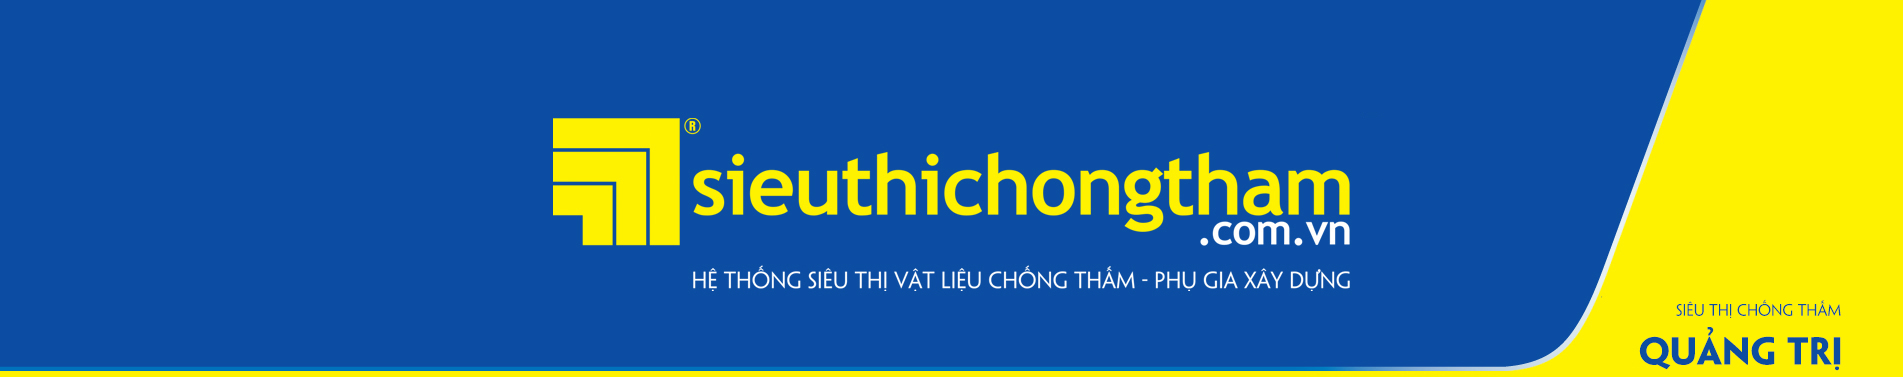 Sieu Thi Chong Tham Quang Tri